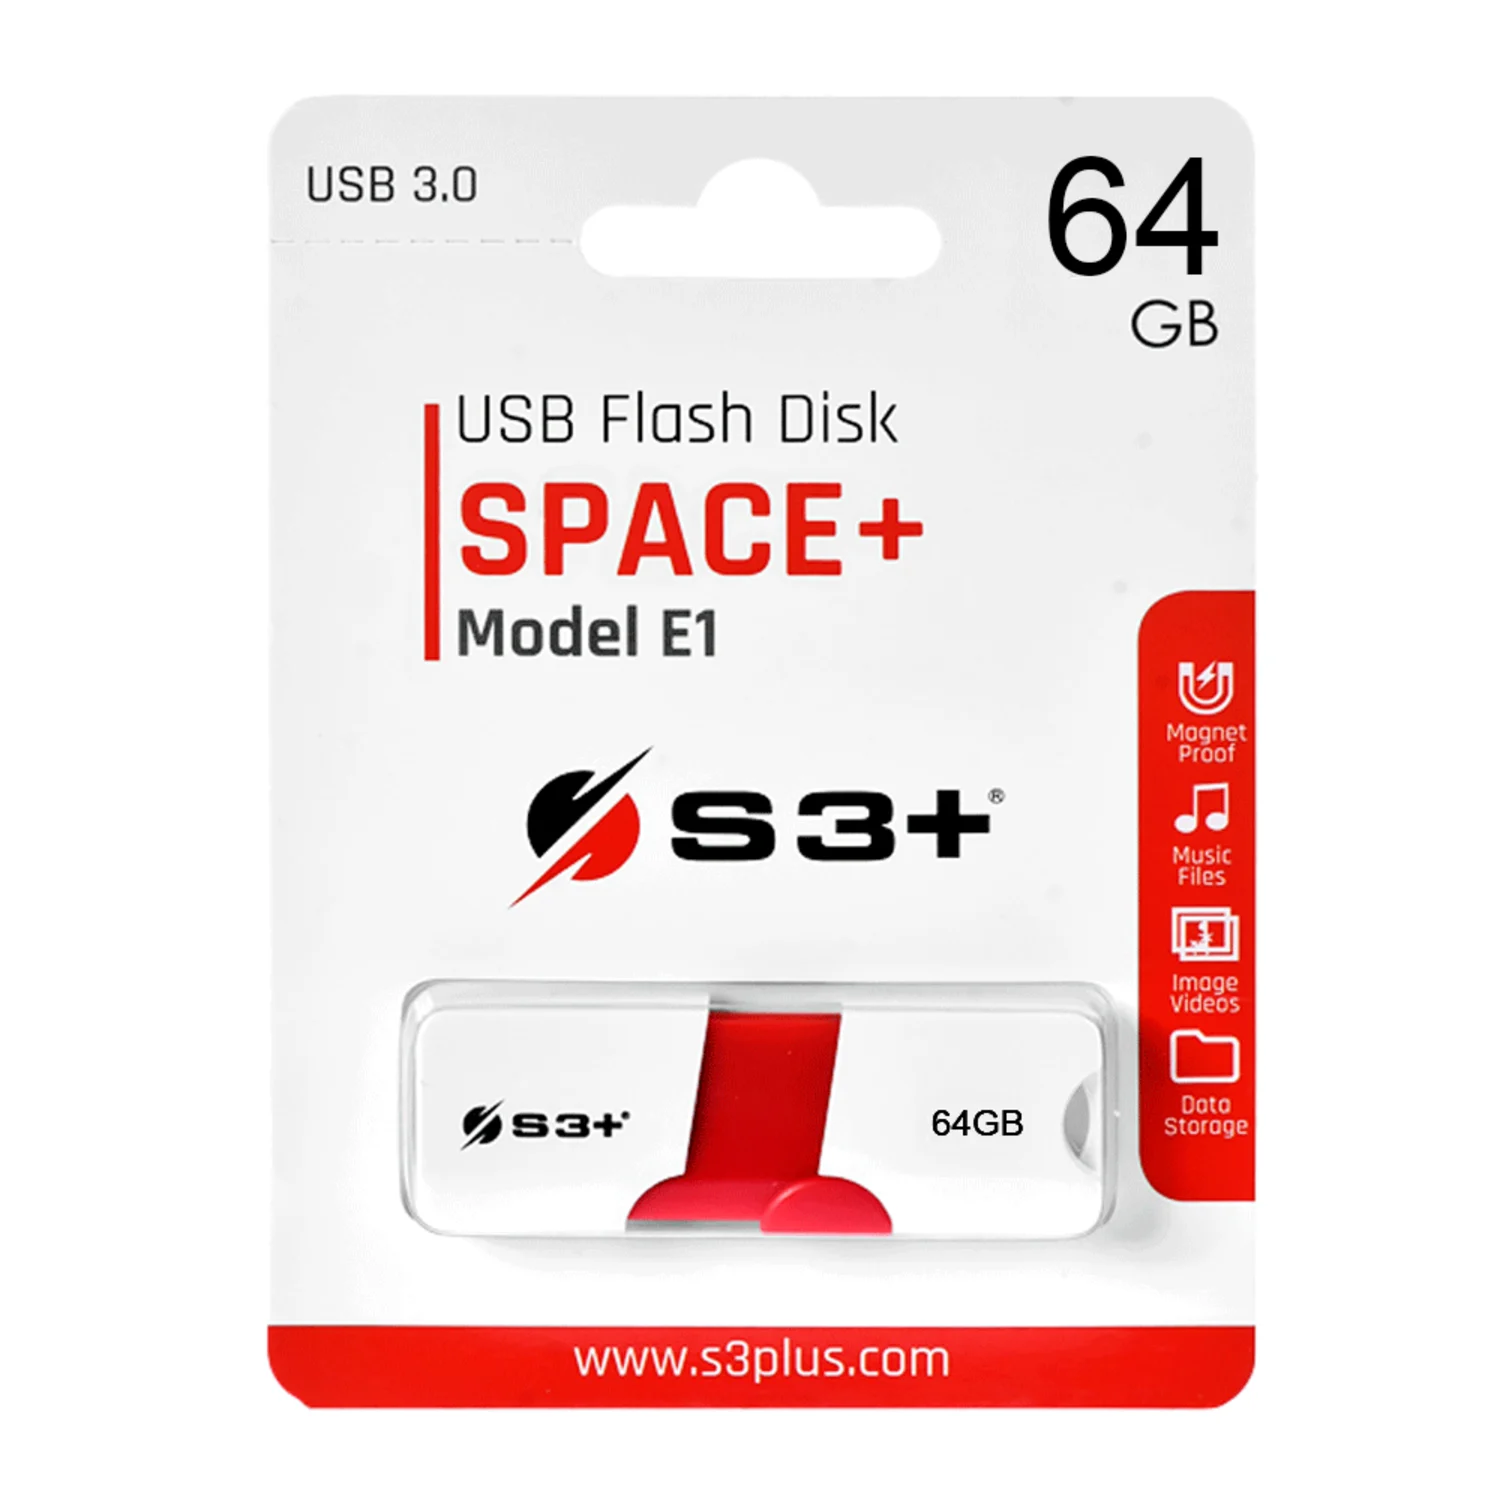 Pendrive S3+ 64GB Space+ / Modelo E1 / USB 3.0 - Branco e Vermelho (S3PD3003064BK)	